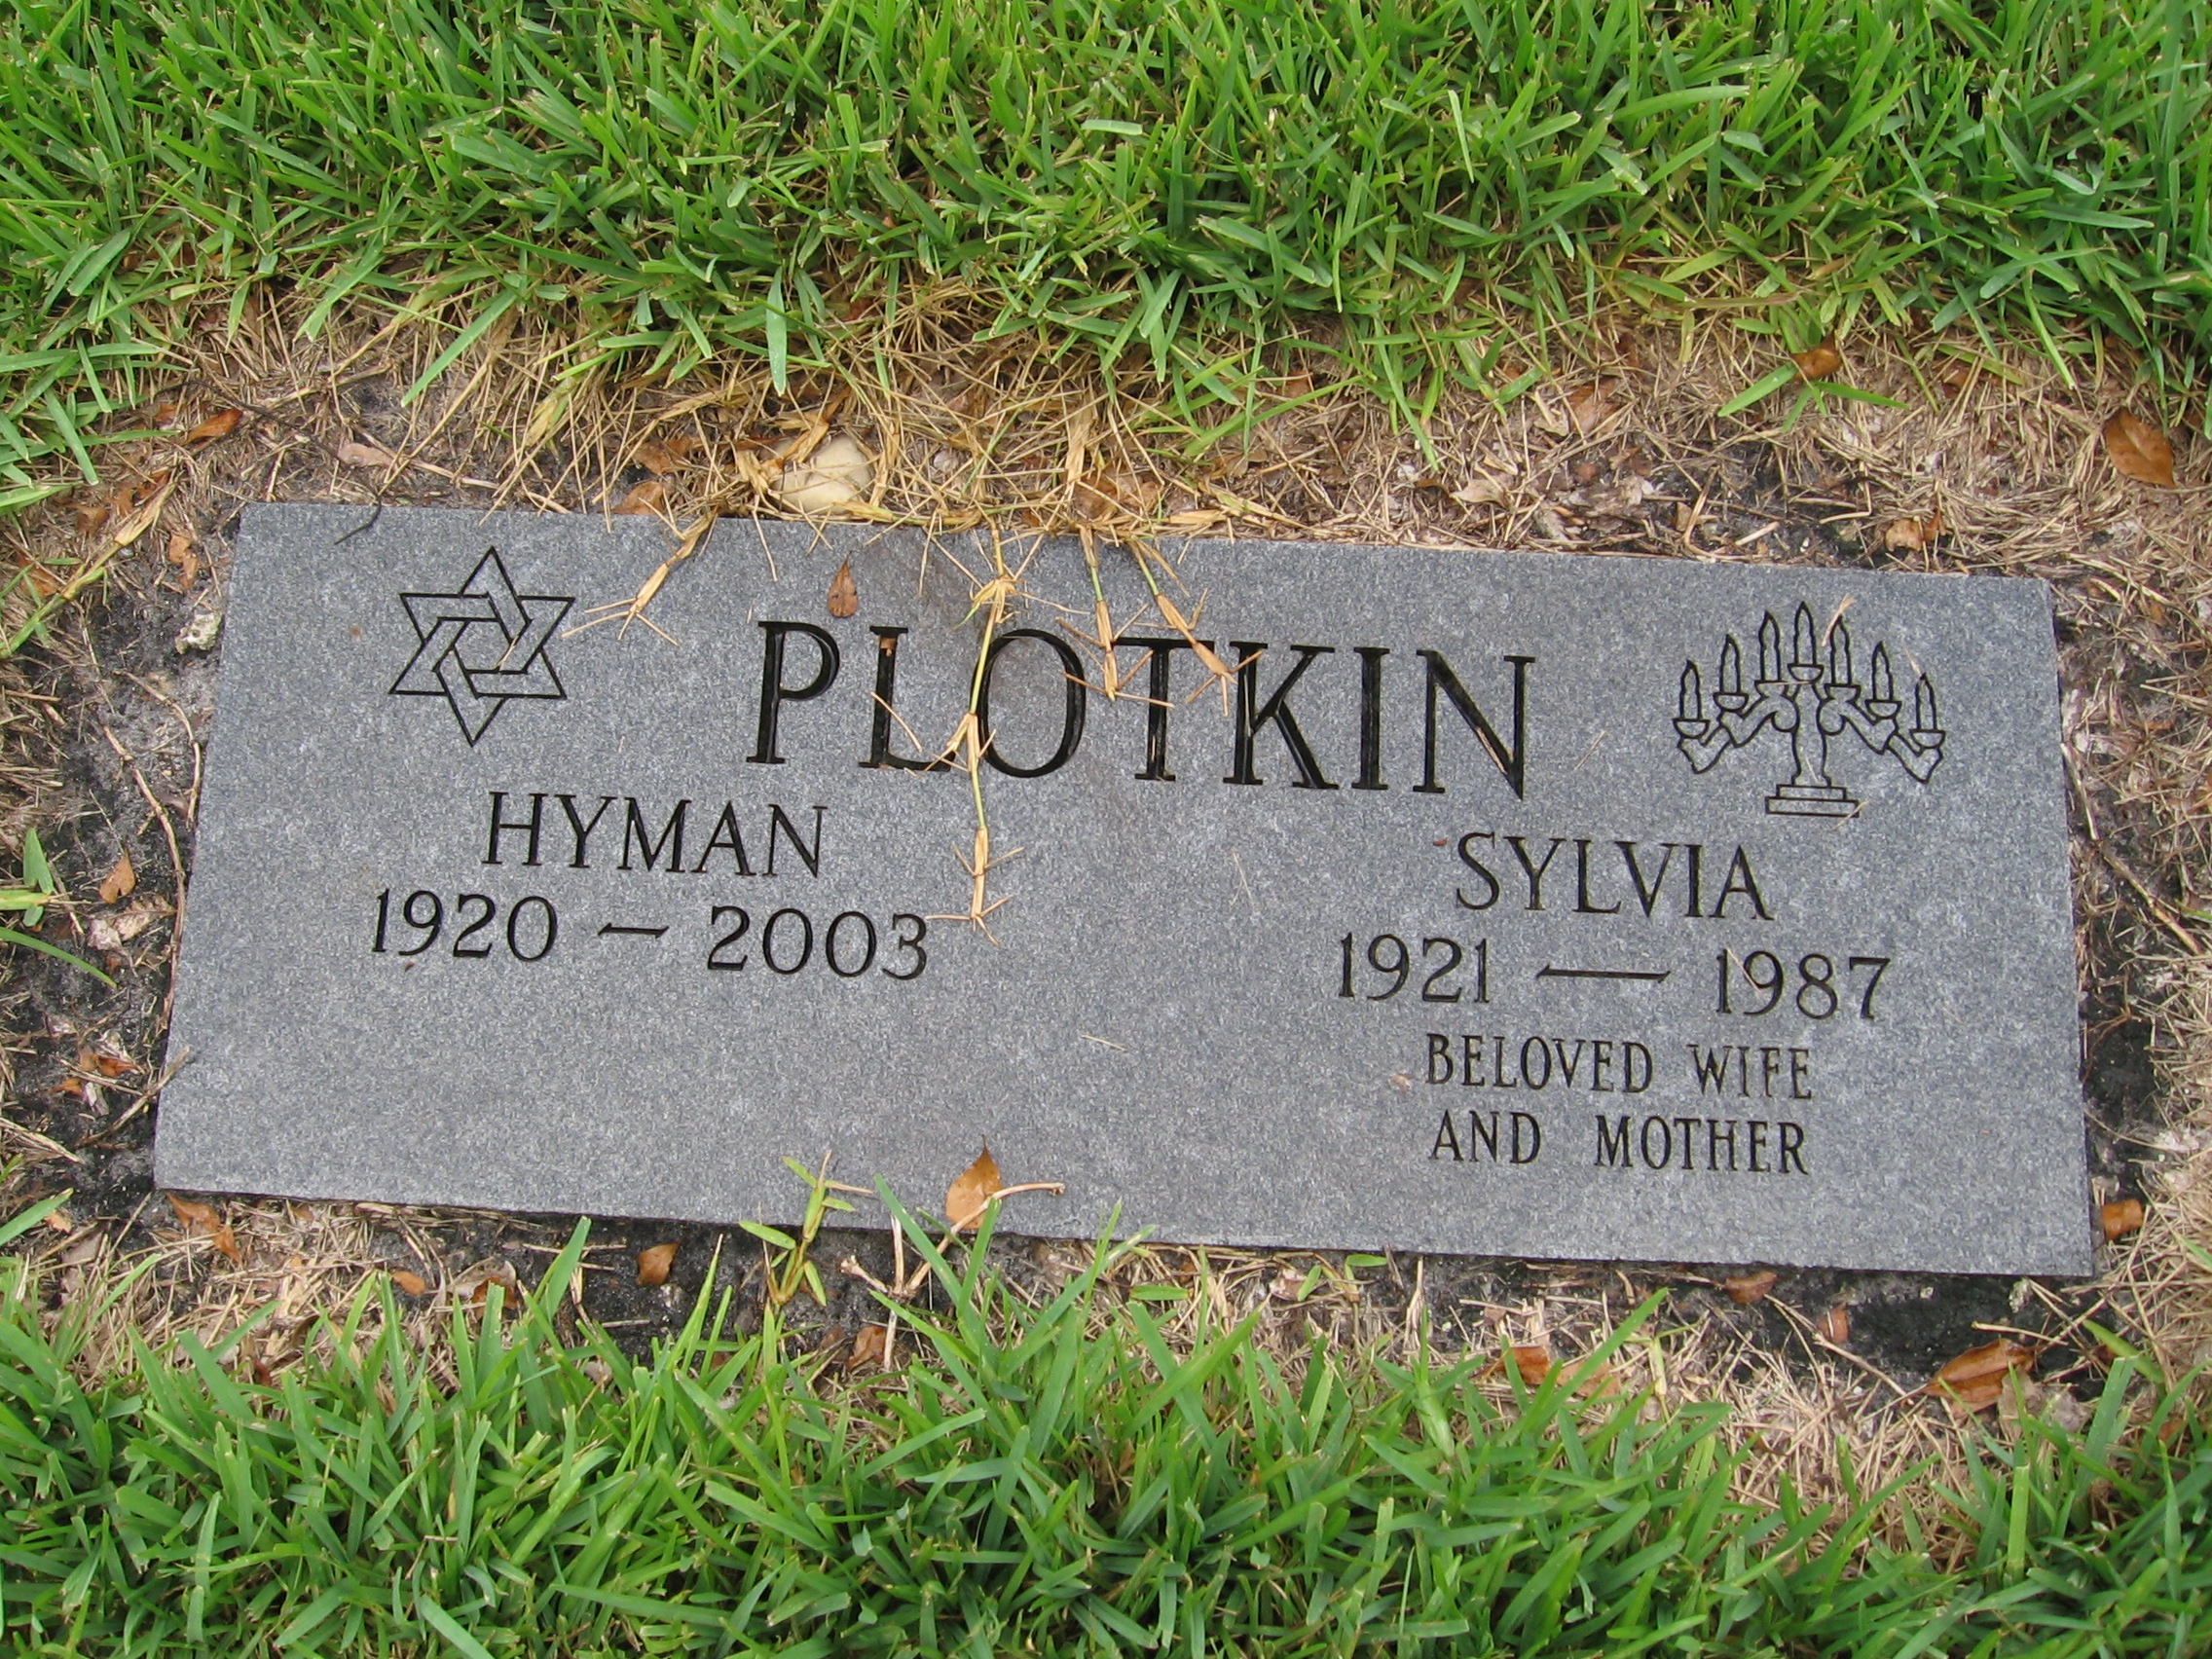 Hyman Plotkin